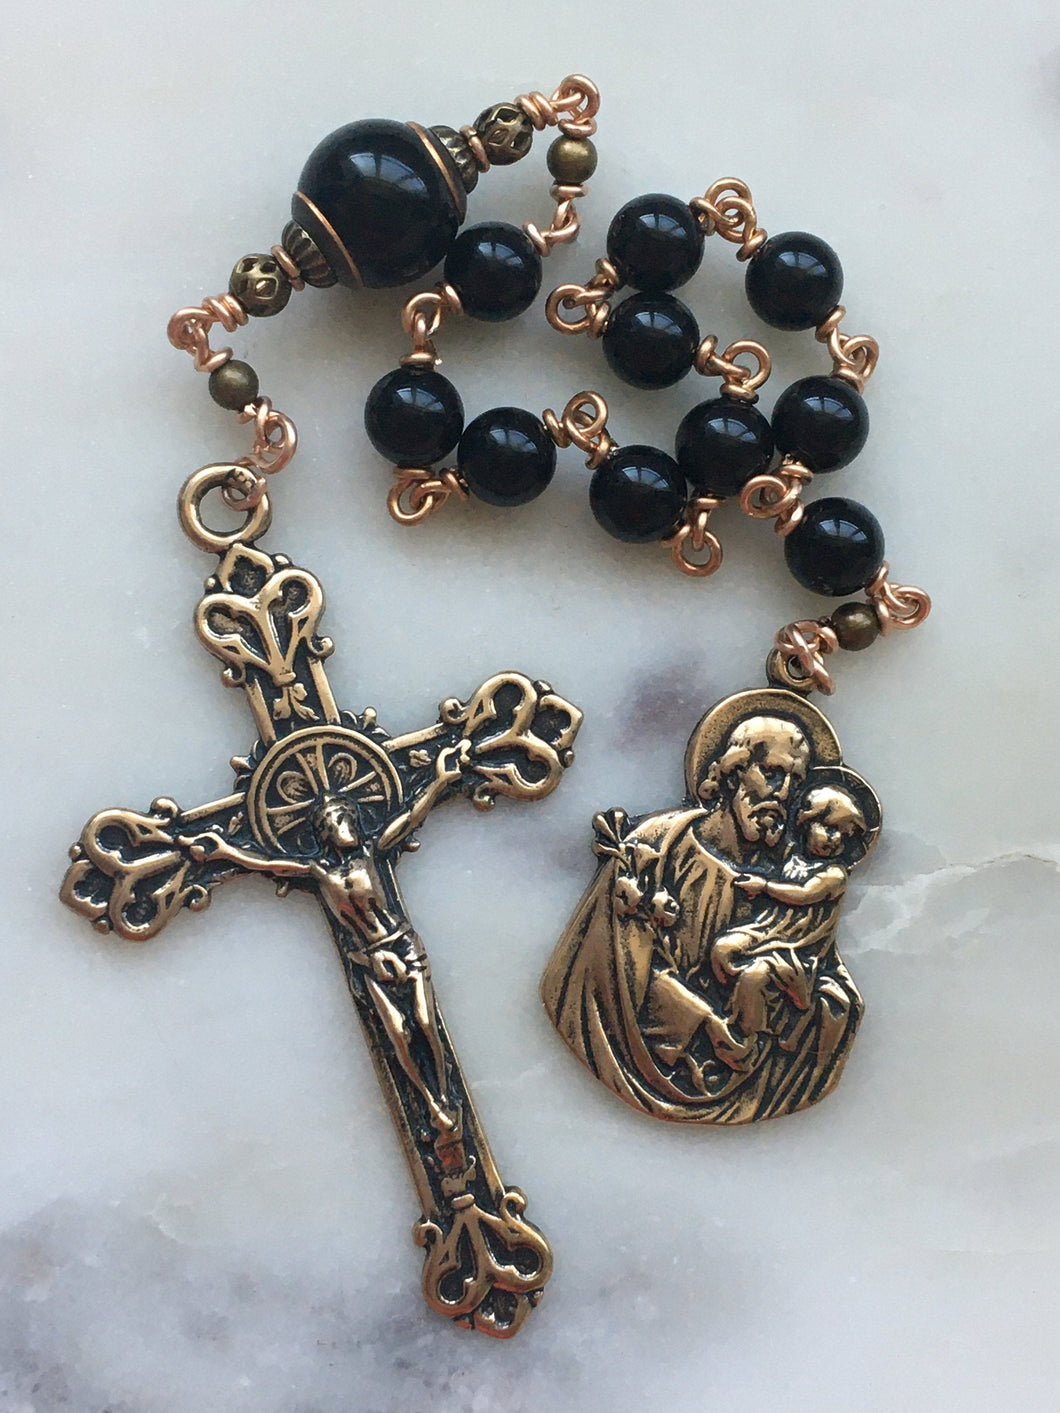 Saint Joseph Single Decade Rosary - Onyx and Bronze - Lilies Crucifix - Tenner